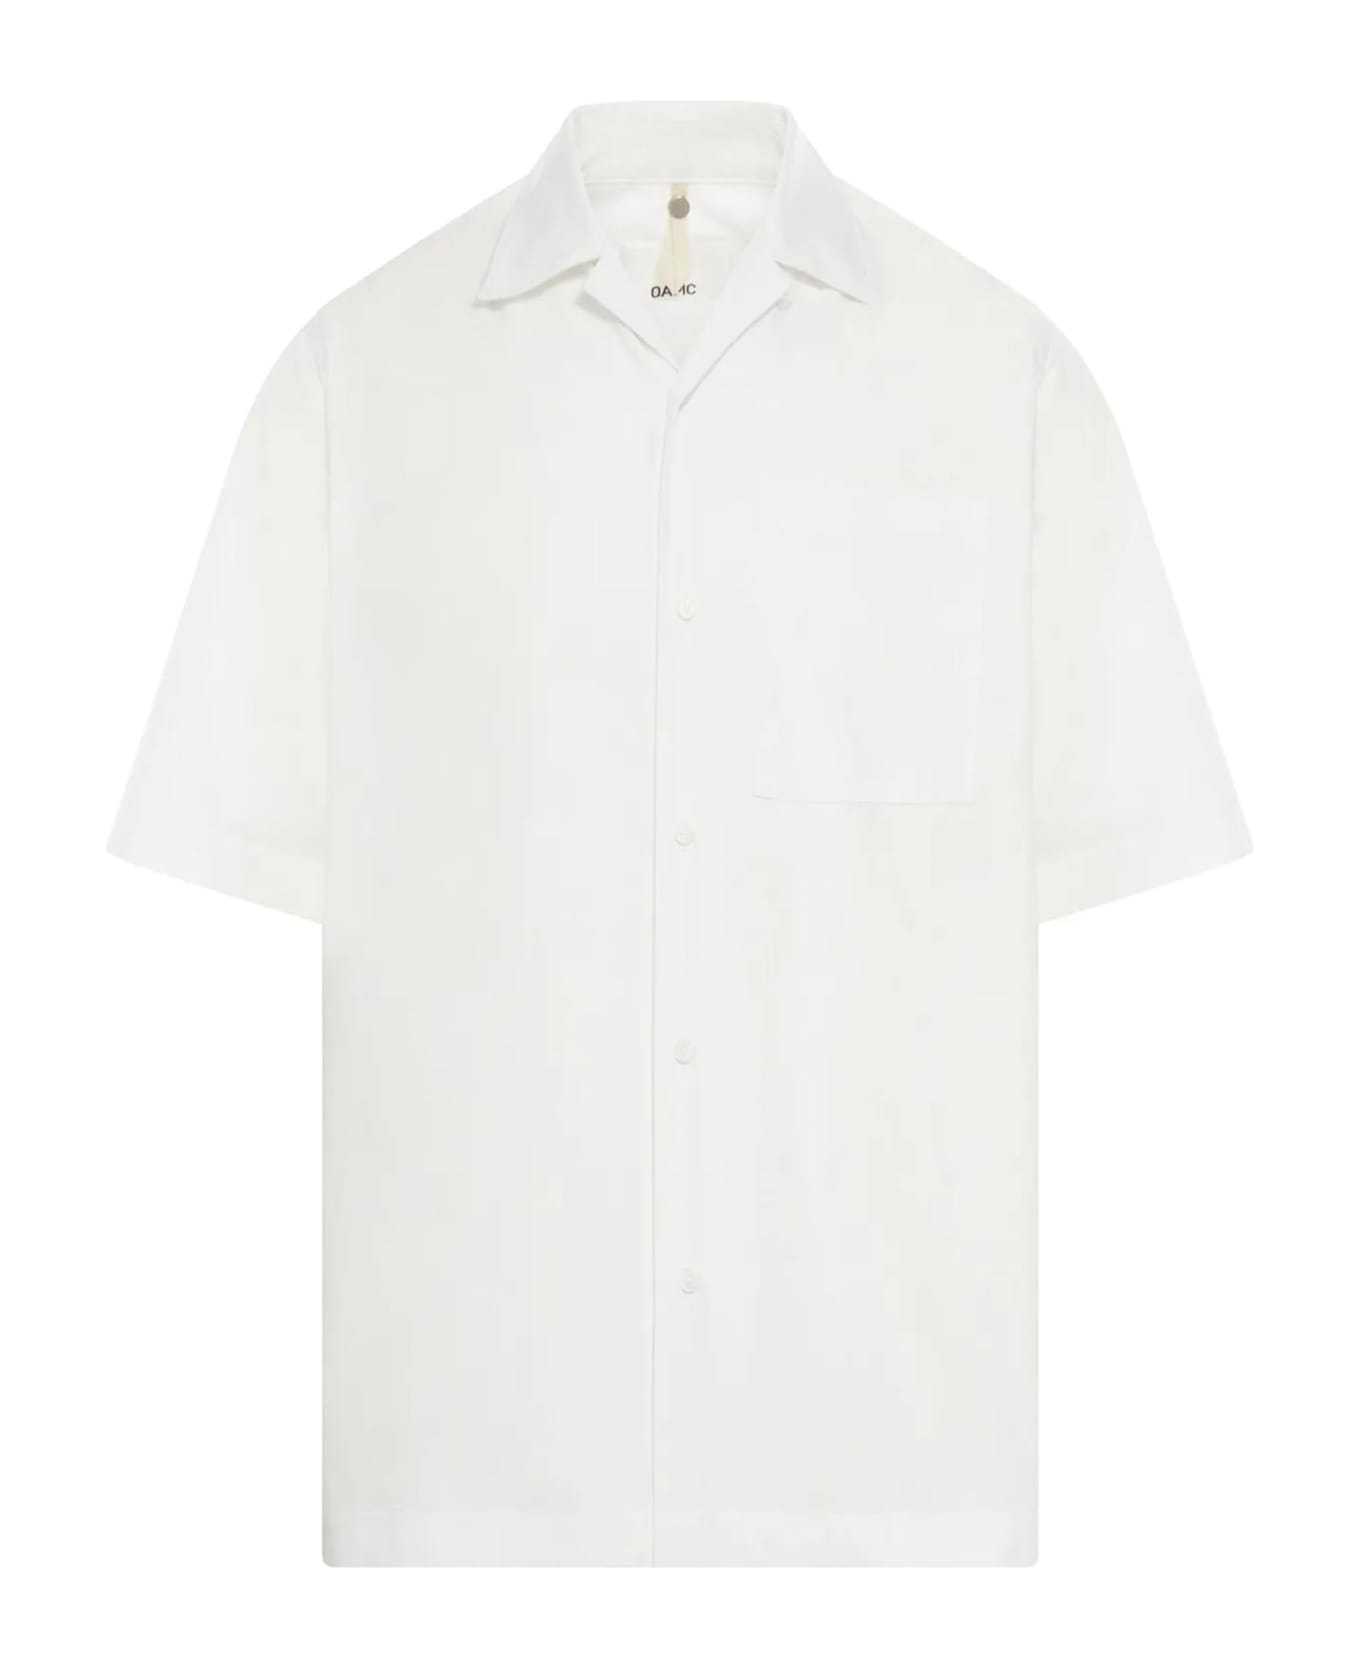 OAMC White Cotton Blend Shirt - White